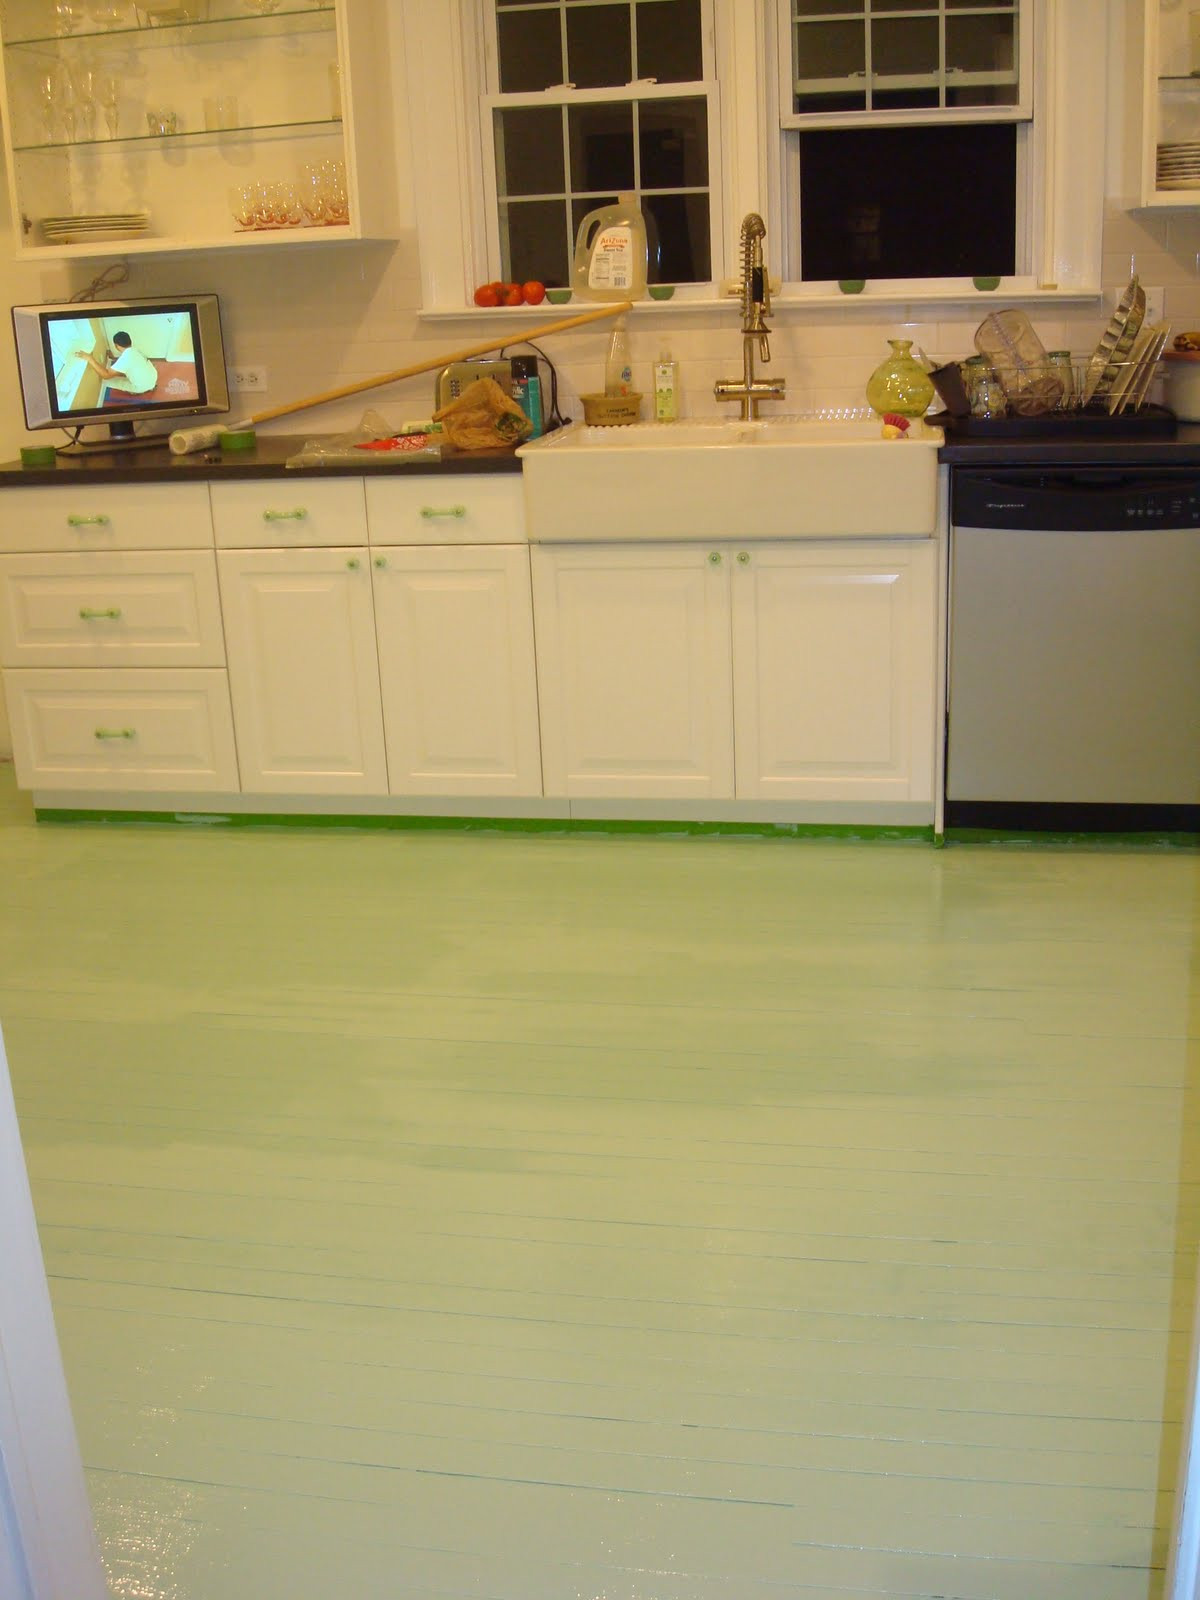 Painted Kitchen Floor Tiles
 DIY Painted Kitchen Floor for $50 Showit Blog